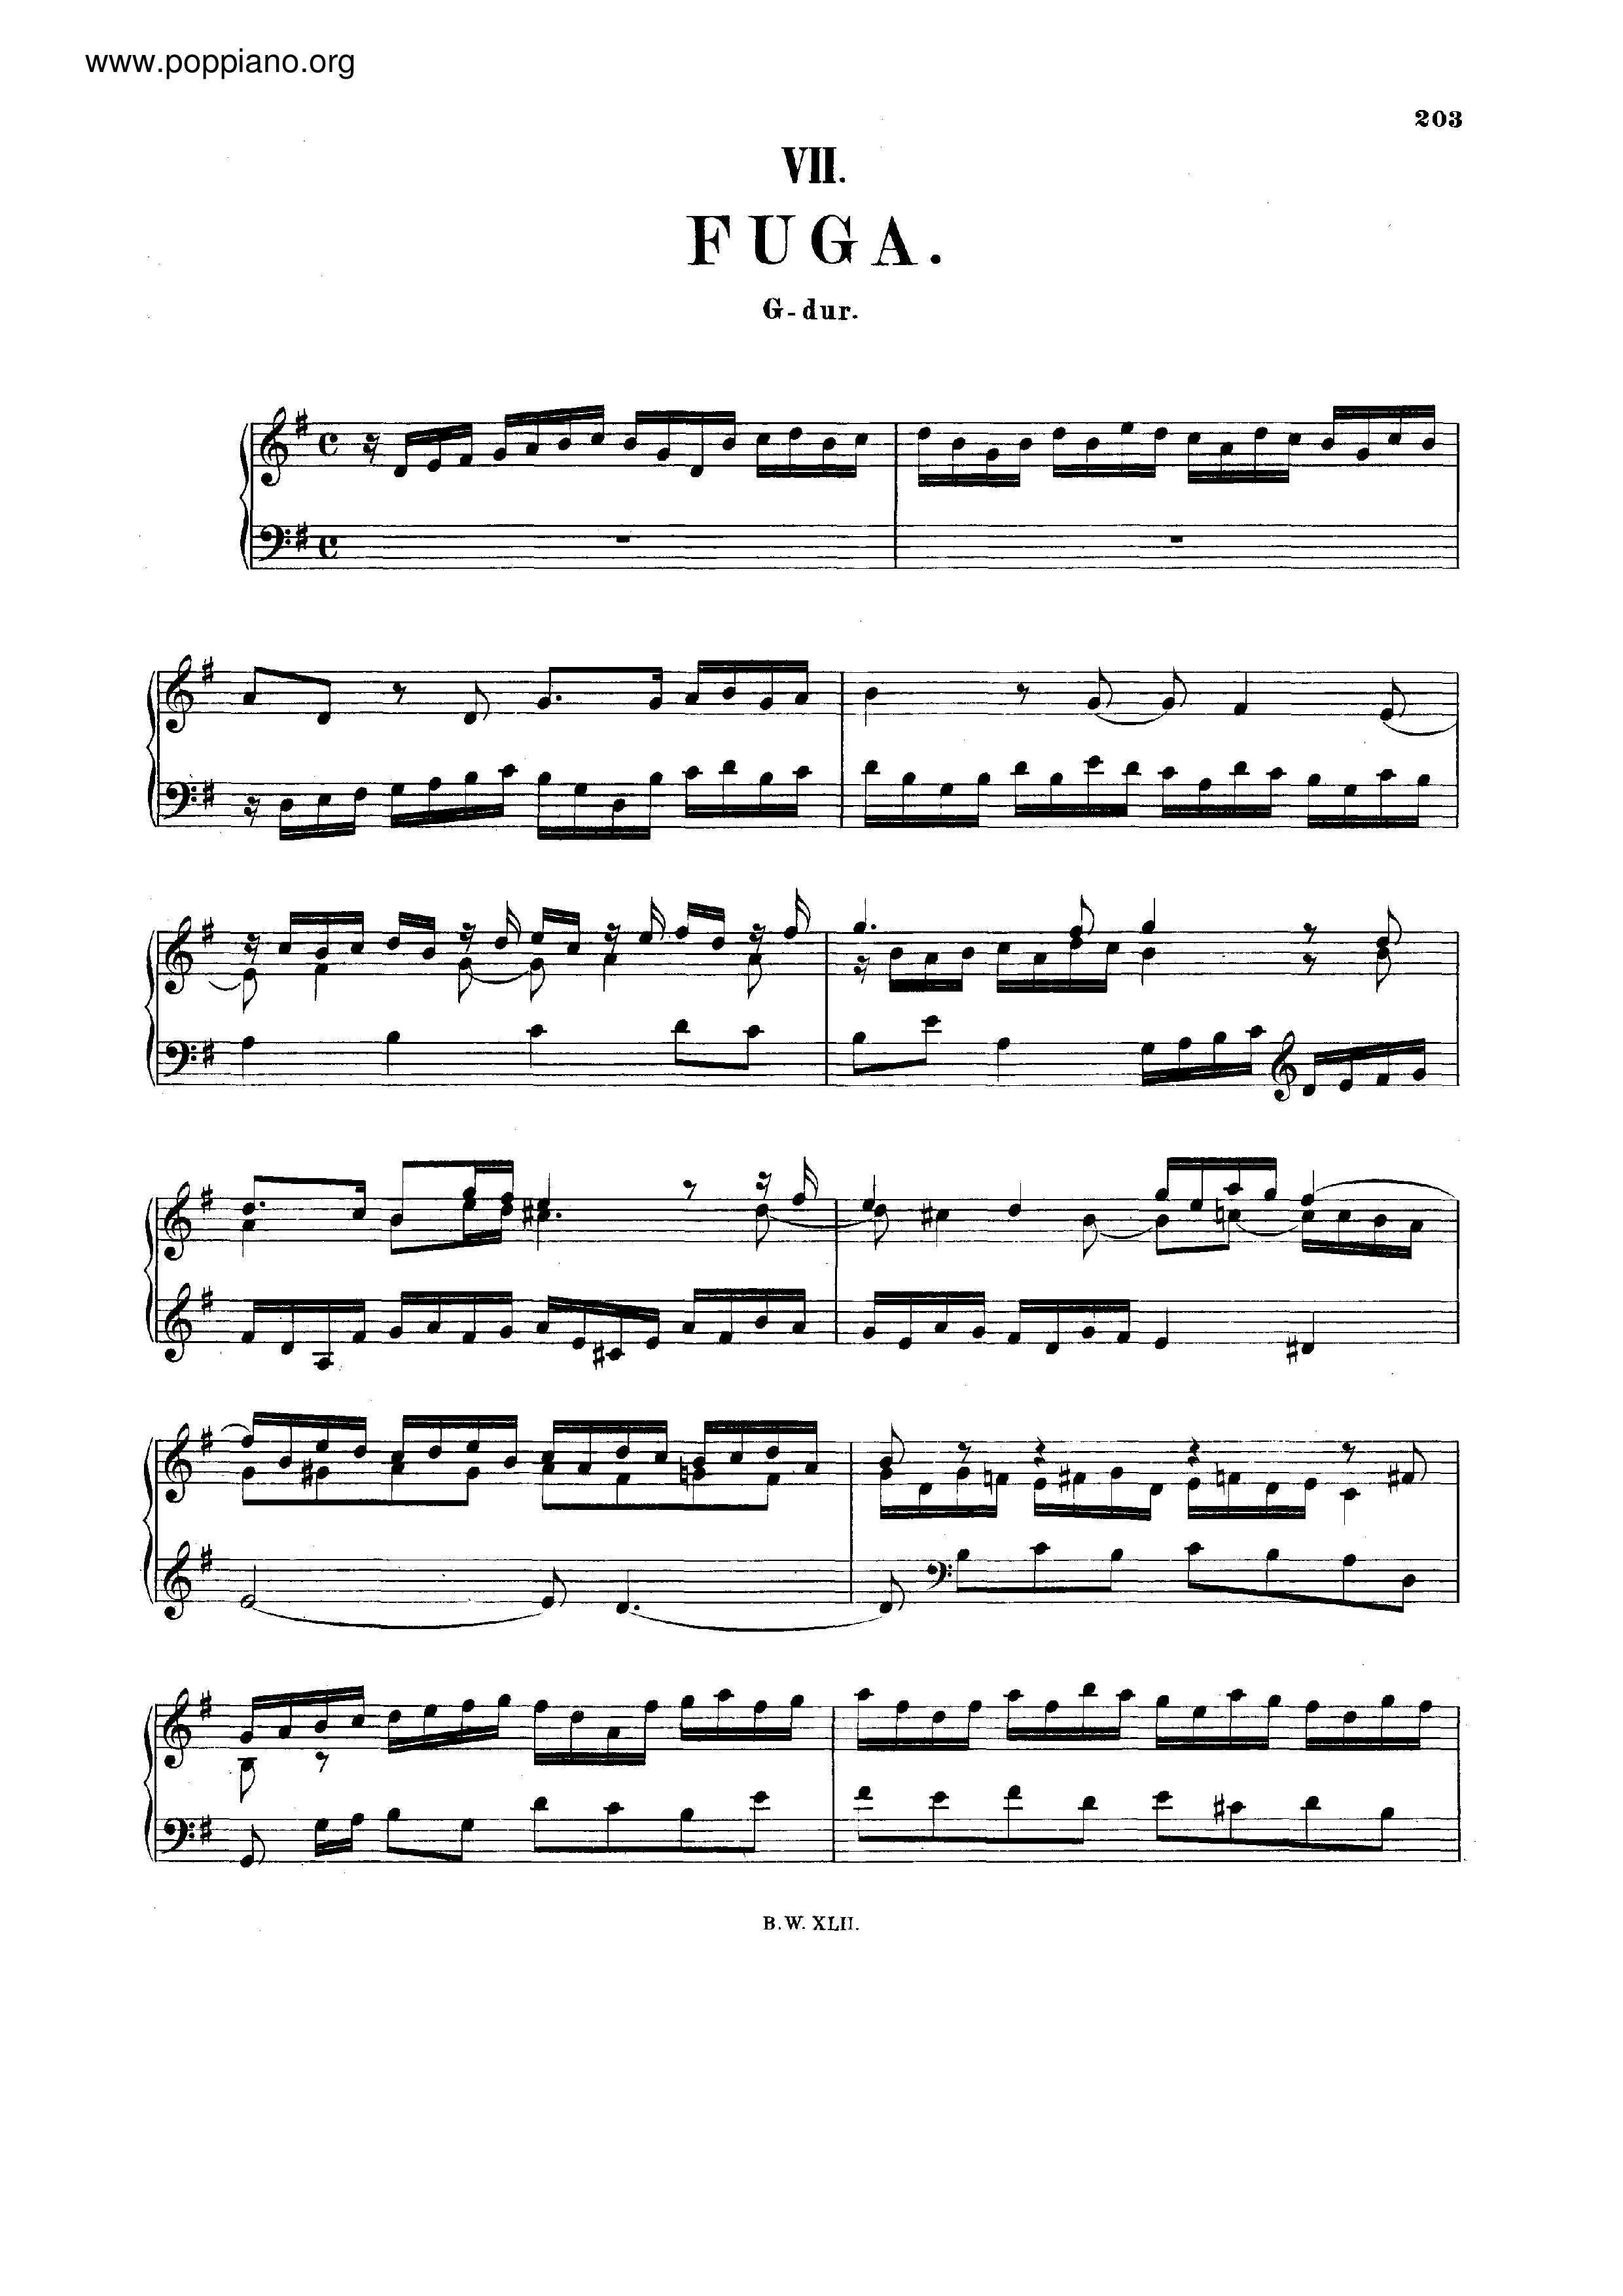 Fugue in G major, BWV 957ピアノ譜